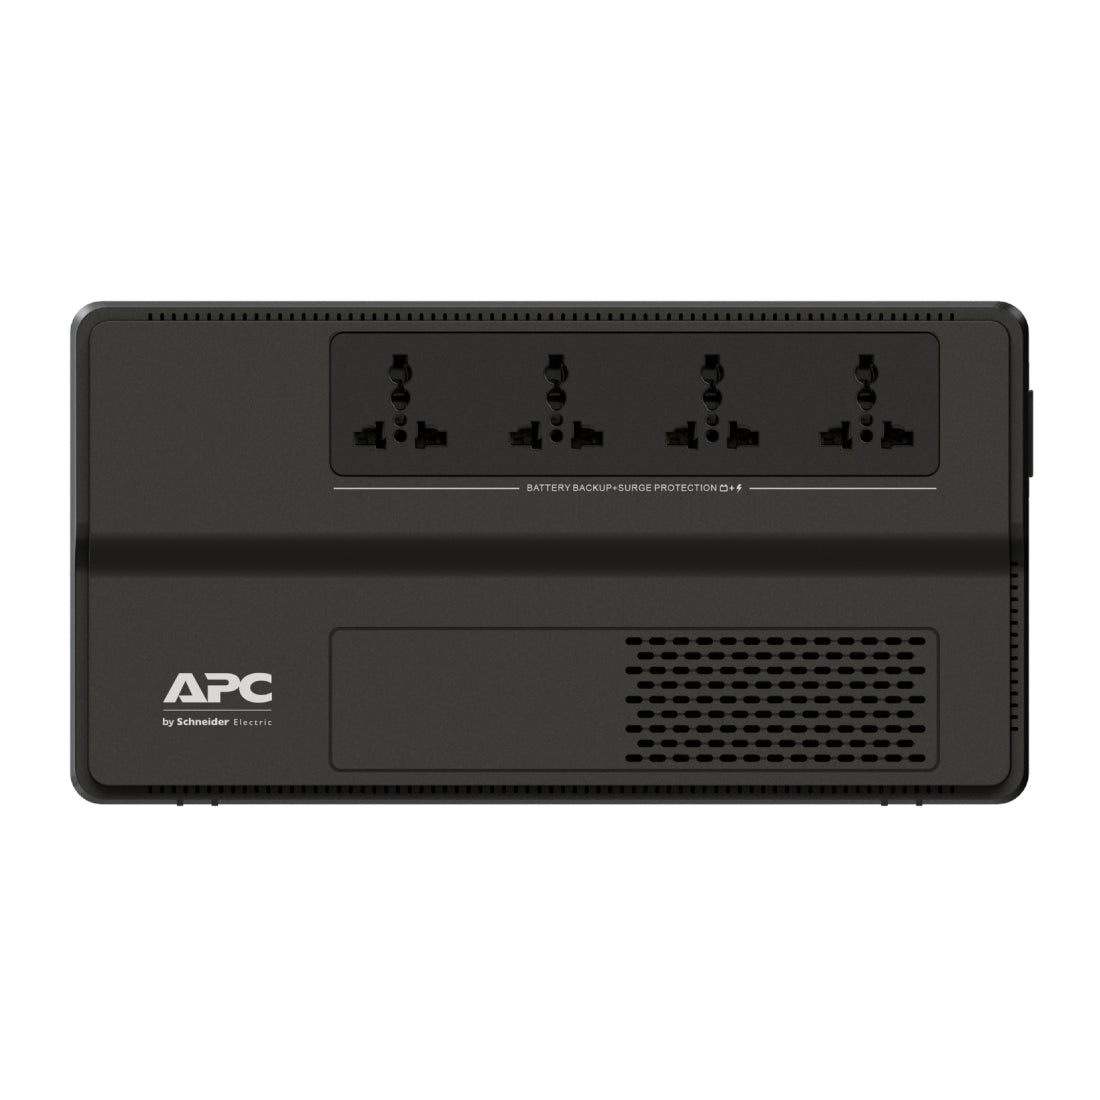 APC Back-UPS 650VA AVR 4 Universal Outlets Uninterruptible Power Supply - Store 974 | ستور ٩٧٤